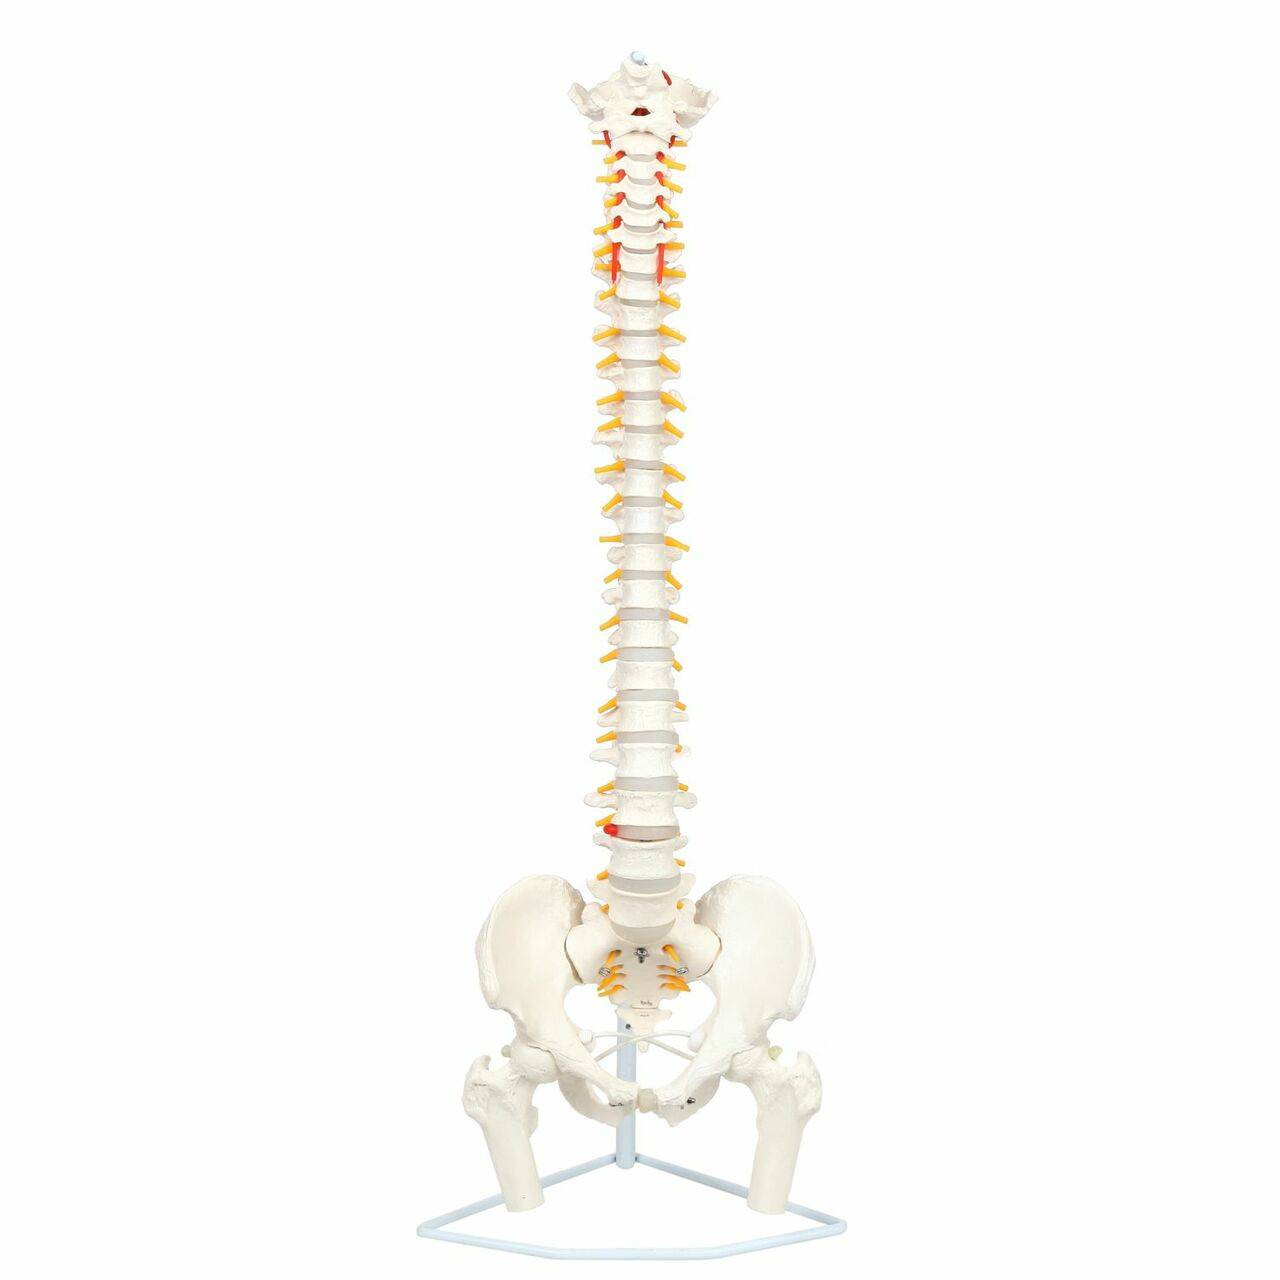 1:1th Flexible Human Spine Anatomical Model w/ Pelvis Femur Vertebral Column 